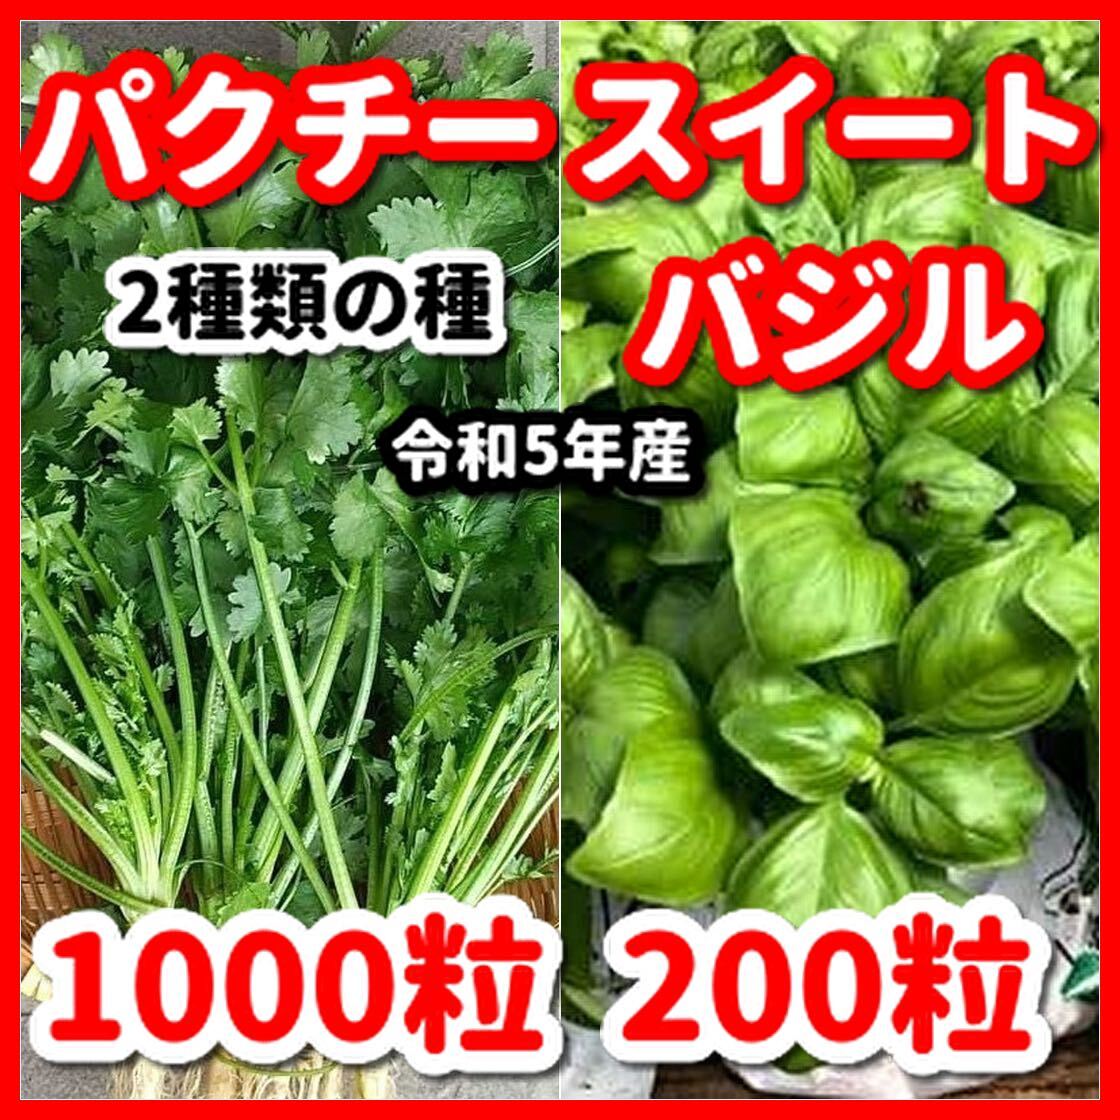  sweet basil & coriander ( large grain type ). kind 2 kind set * increase amount service middle 